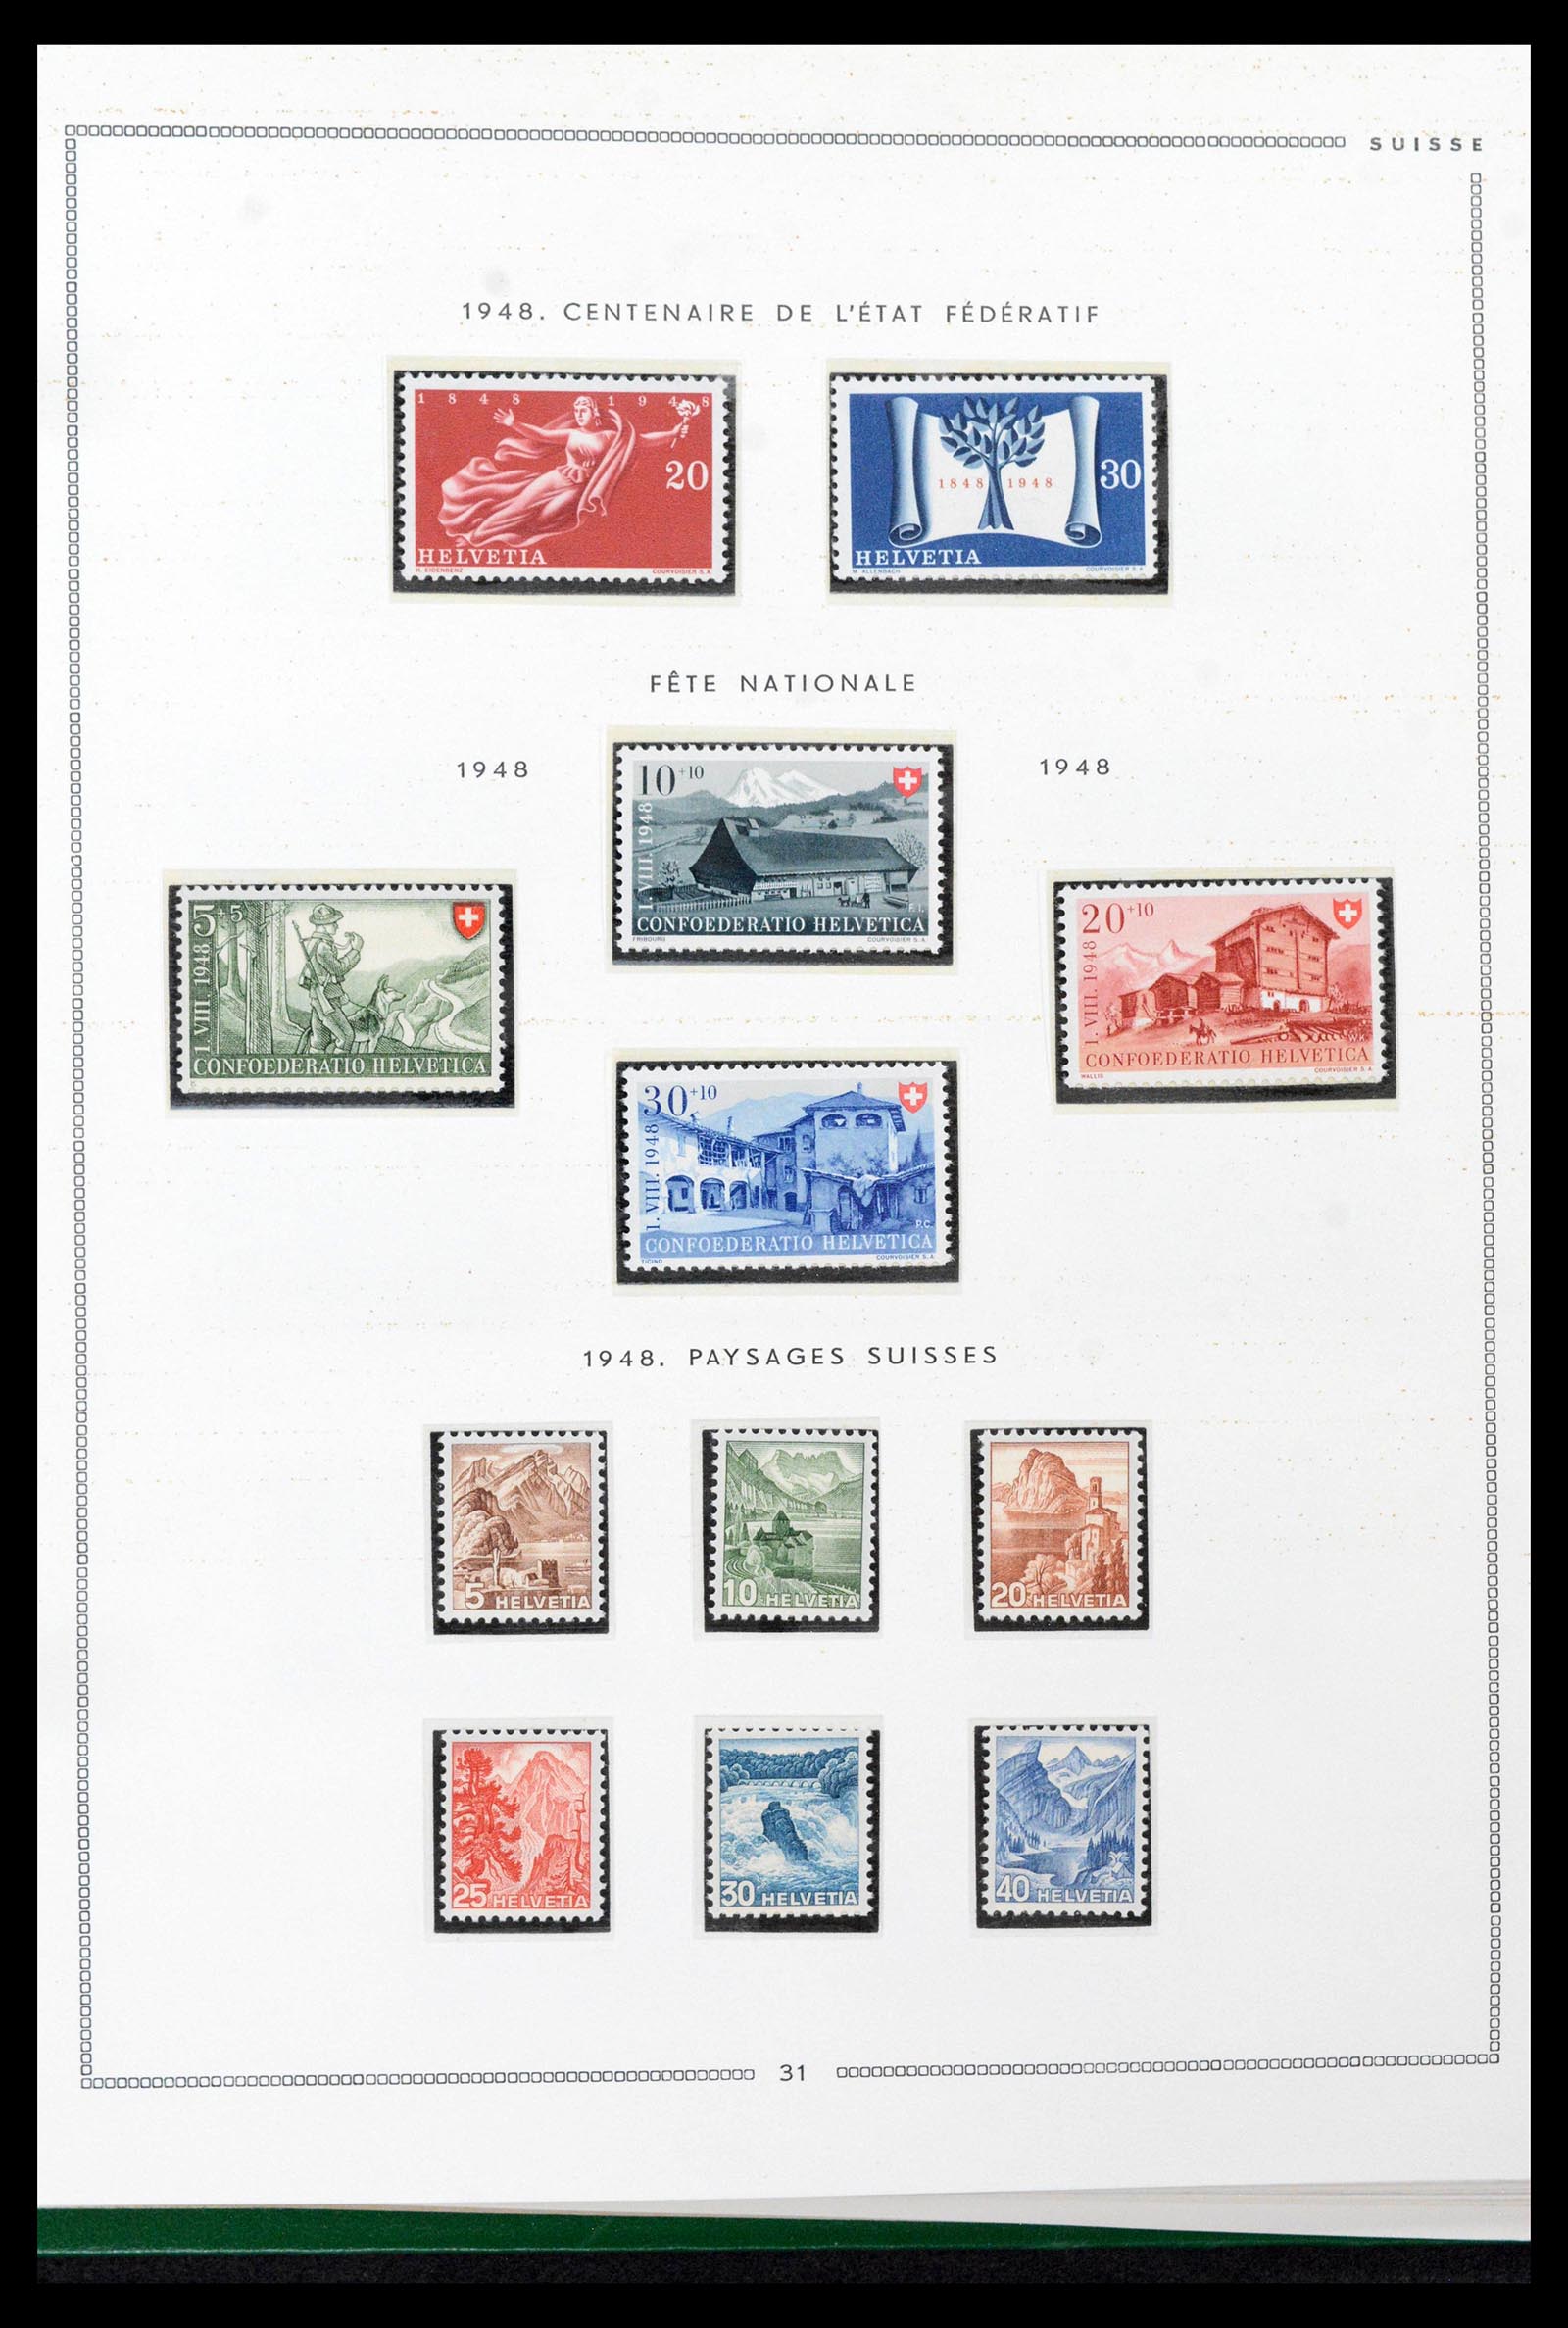 39096 0026 - Stamp collection 39096 Switzerland 1907-1963.